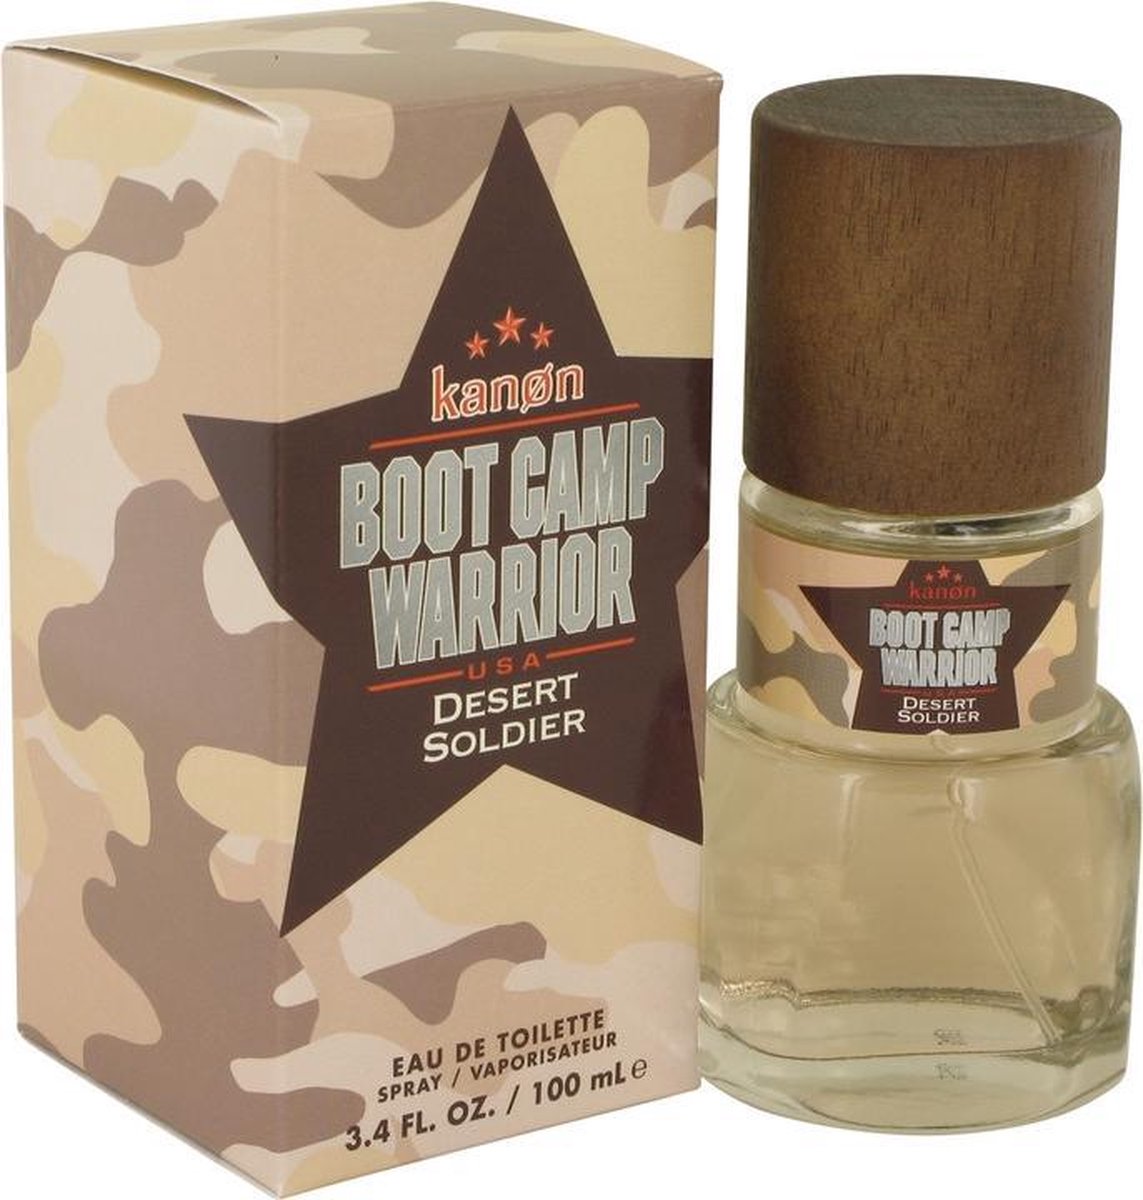 Kanon Boot Camp Warrior Desert Soldier - Eau de toilette spray - 100 ml